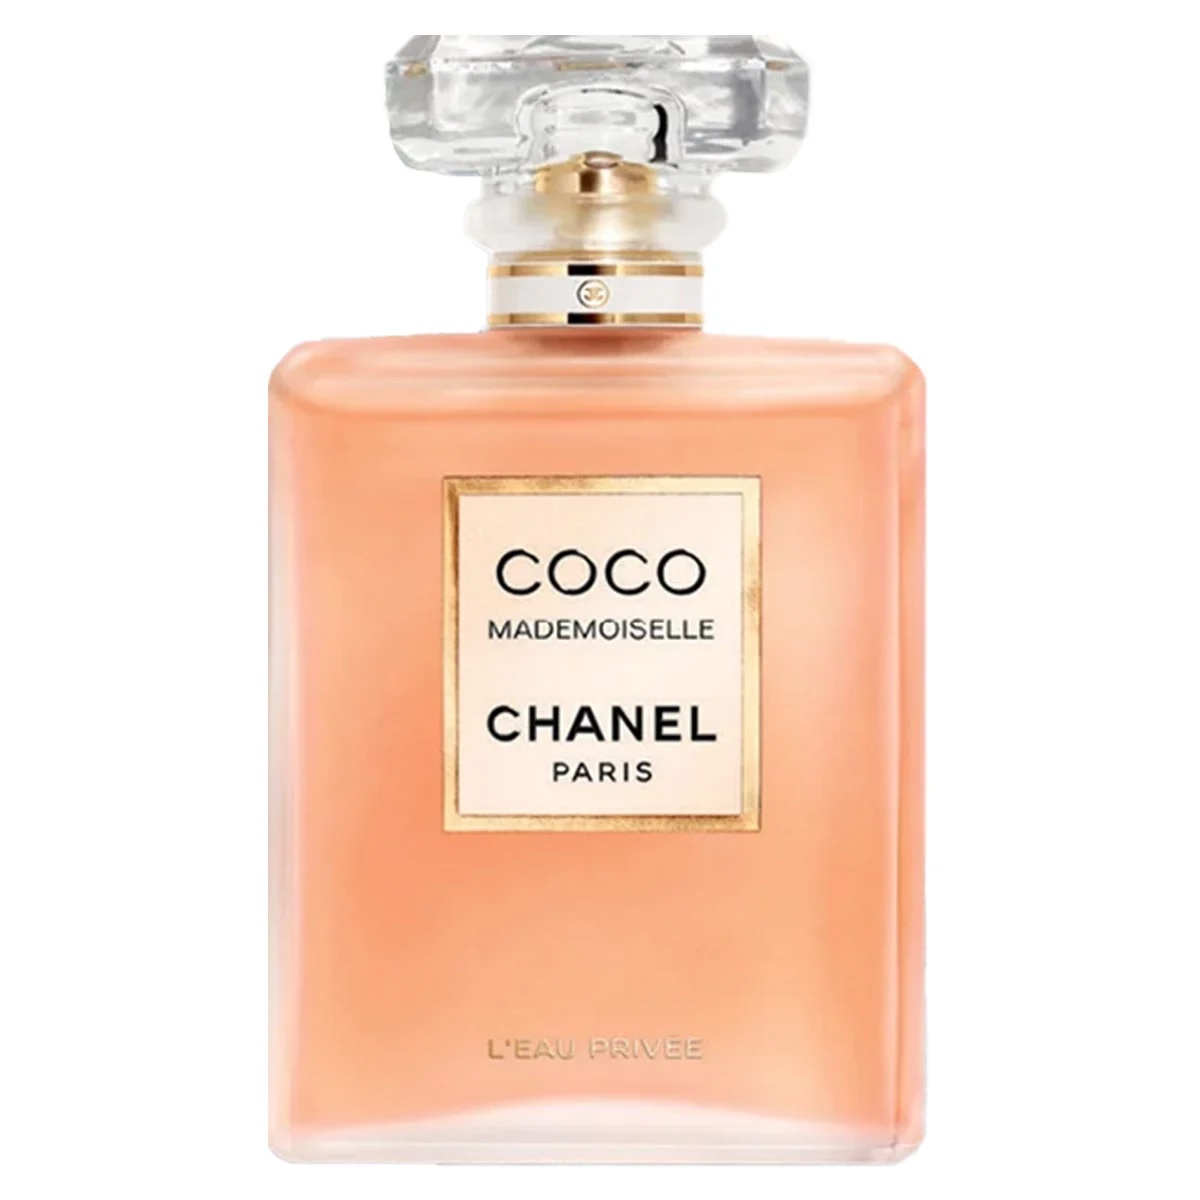 Nước Hoa Chanel Coco Mademoiselle L'eau Privee 